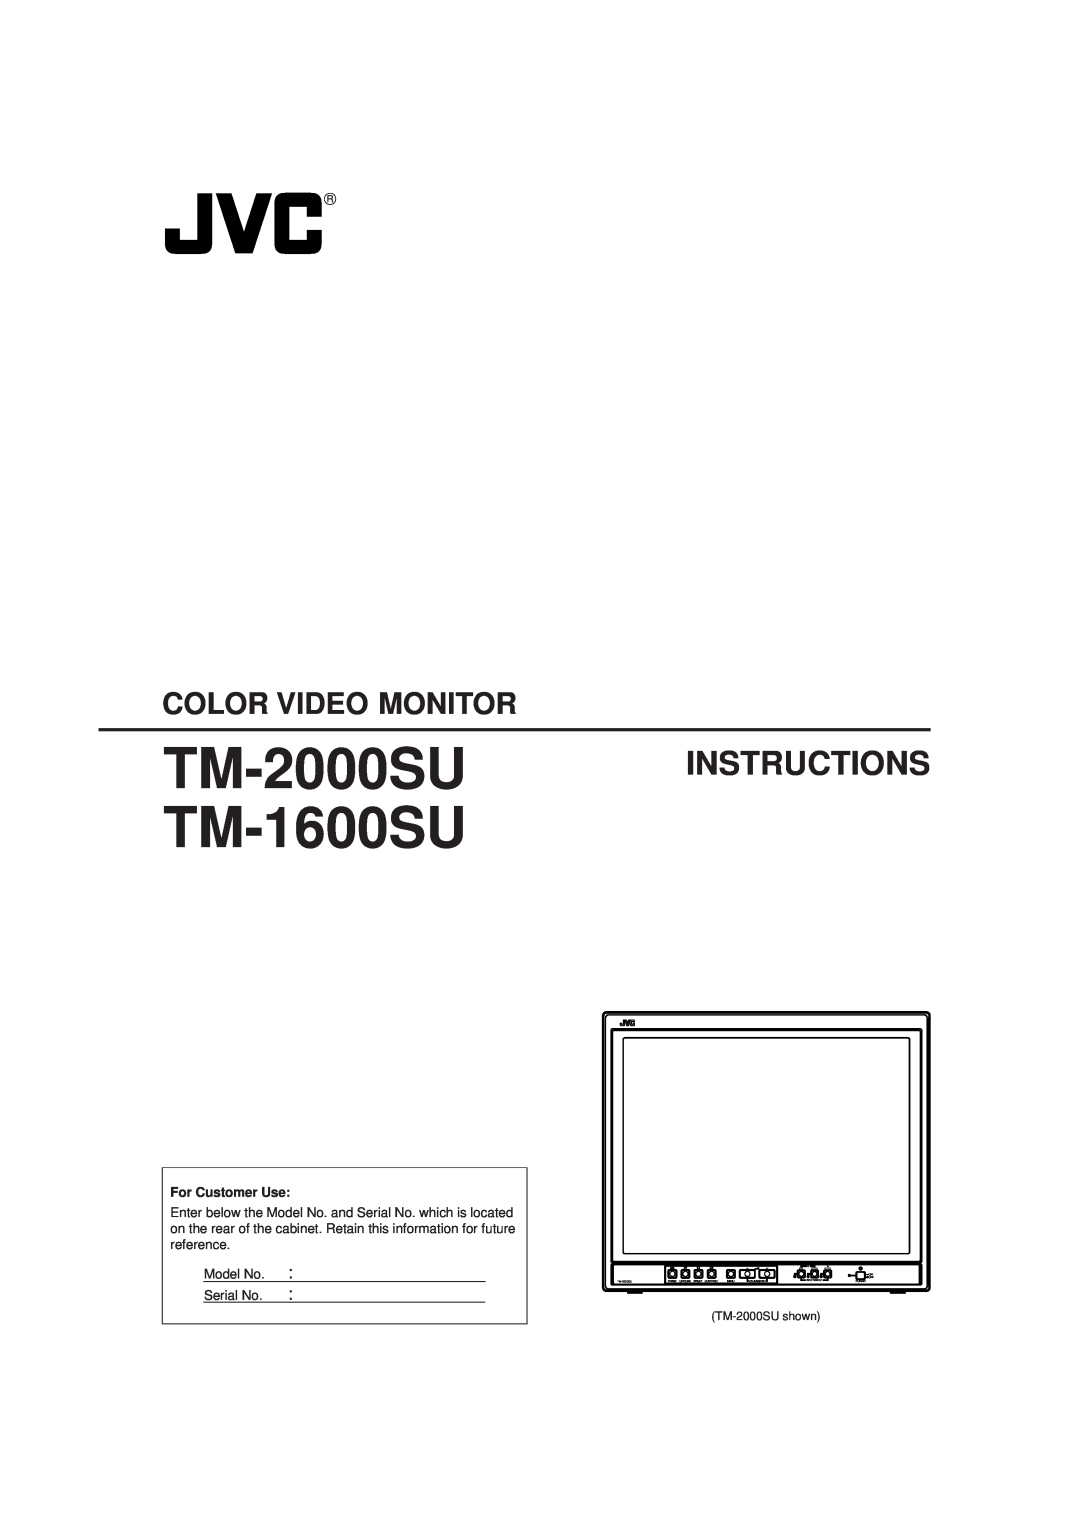 JVC manual Color Video Monitor, TM-2000SU TM-1600SU, Instructions, Phase Chroma Bright Contrast, Menu, Power 